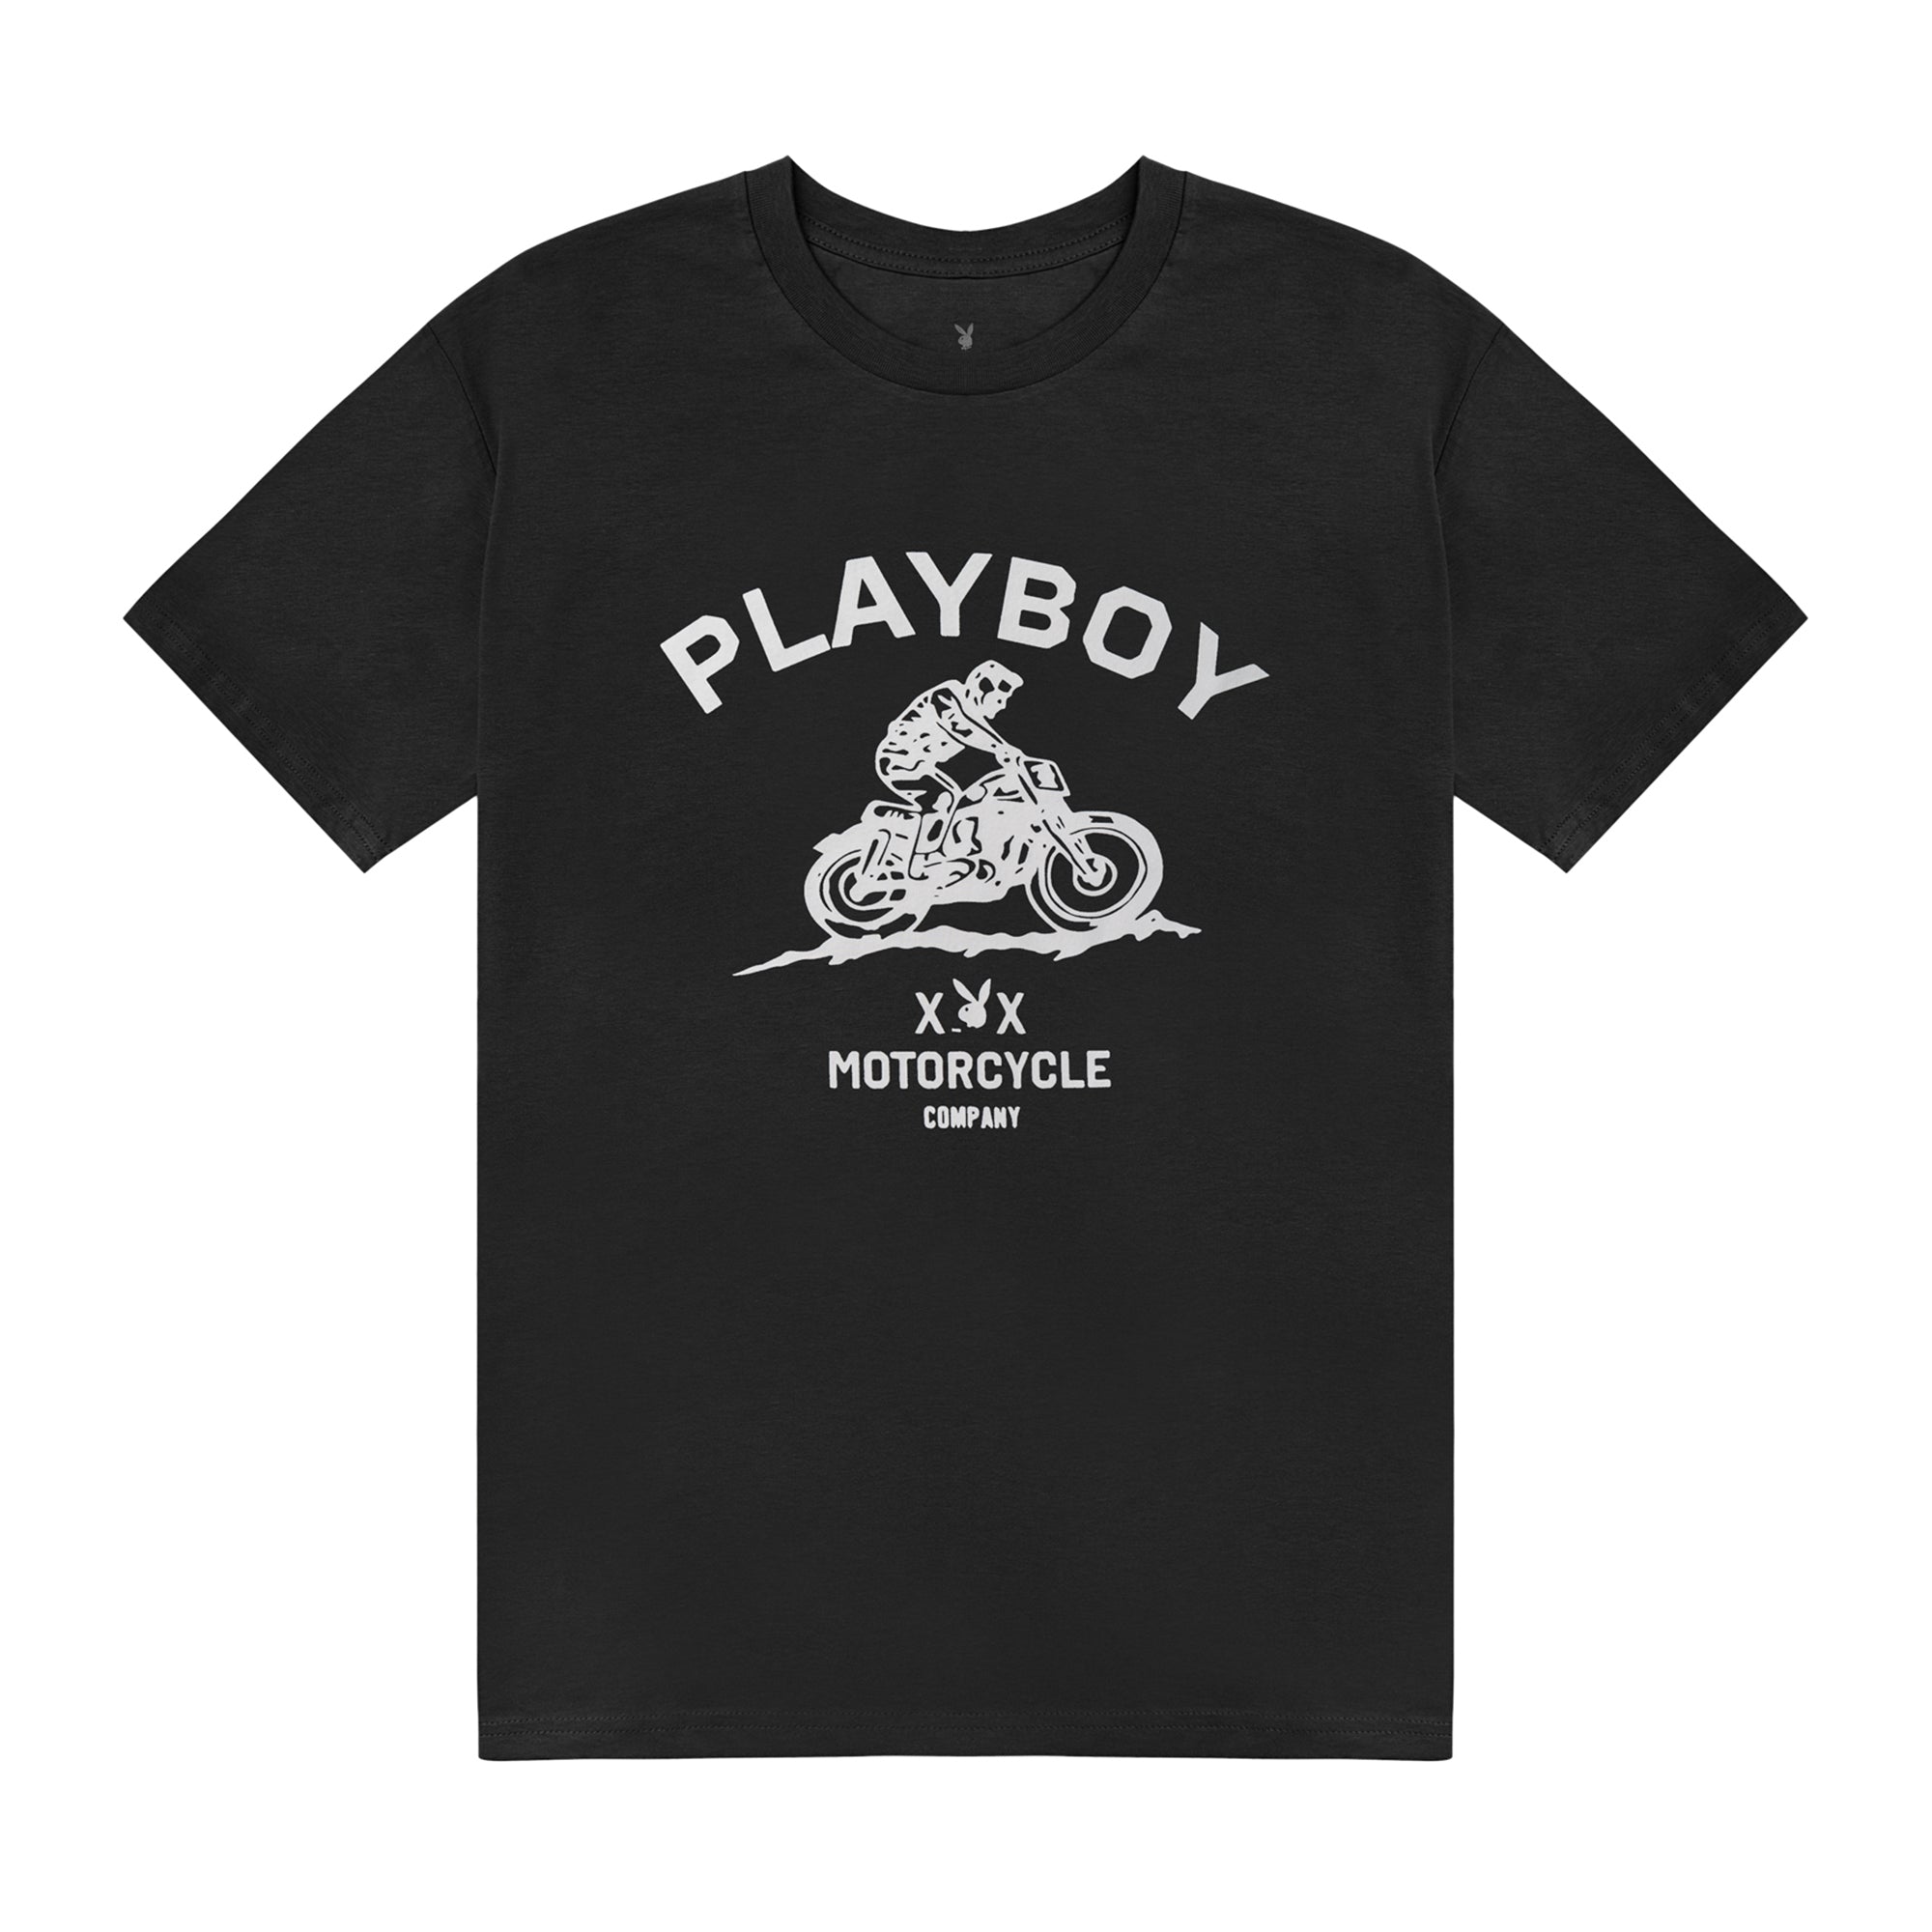 Playboy Motorcycle Company T-Shirt